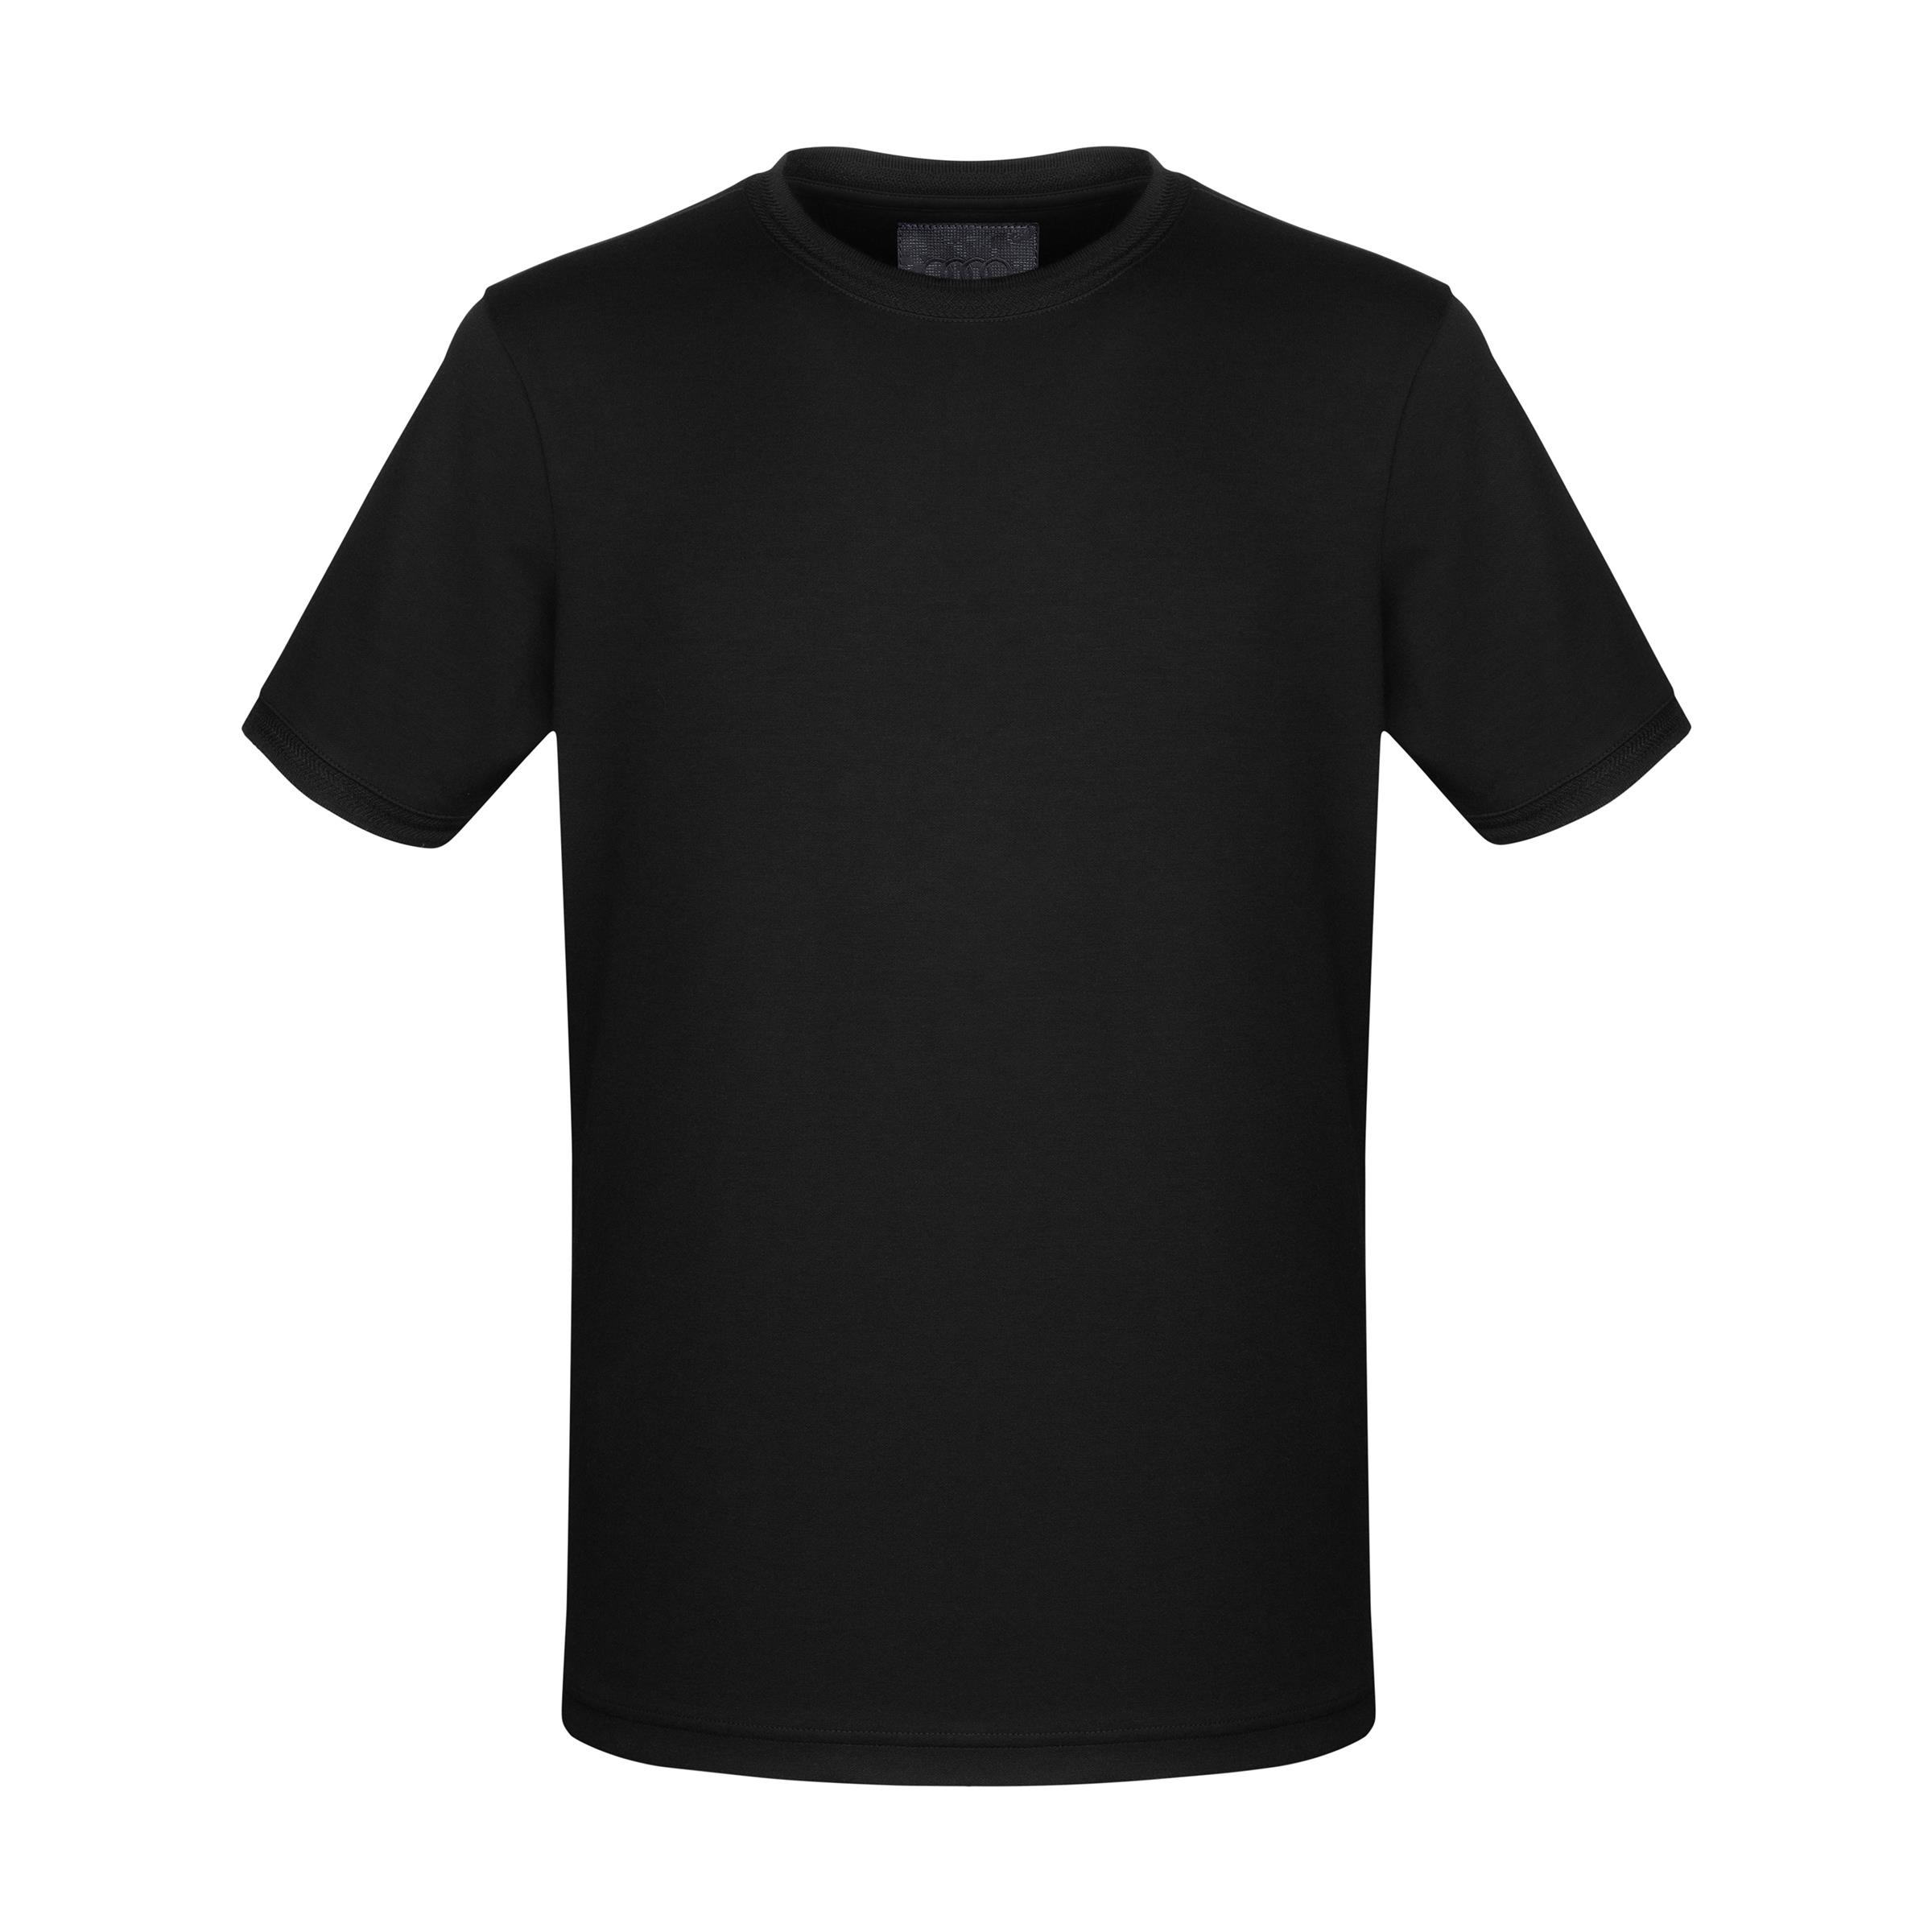 Audi Tec-Shirt für Herren in schwarz